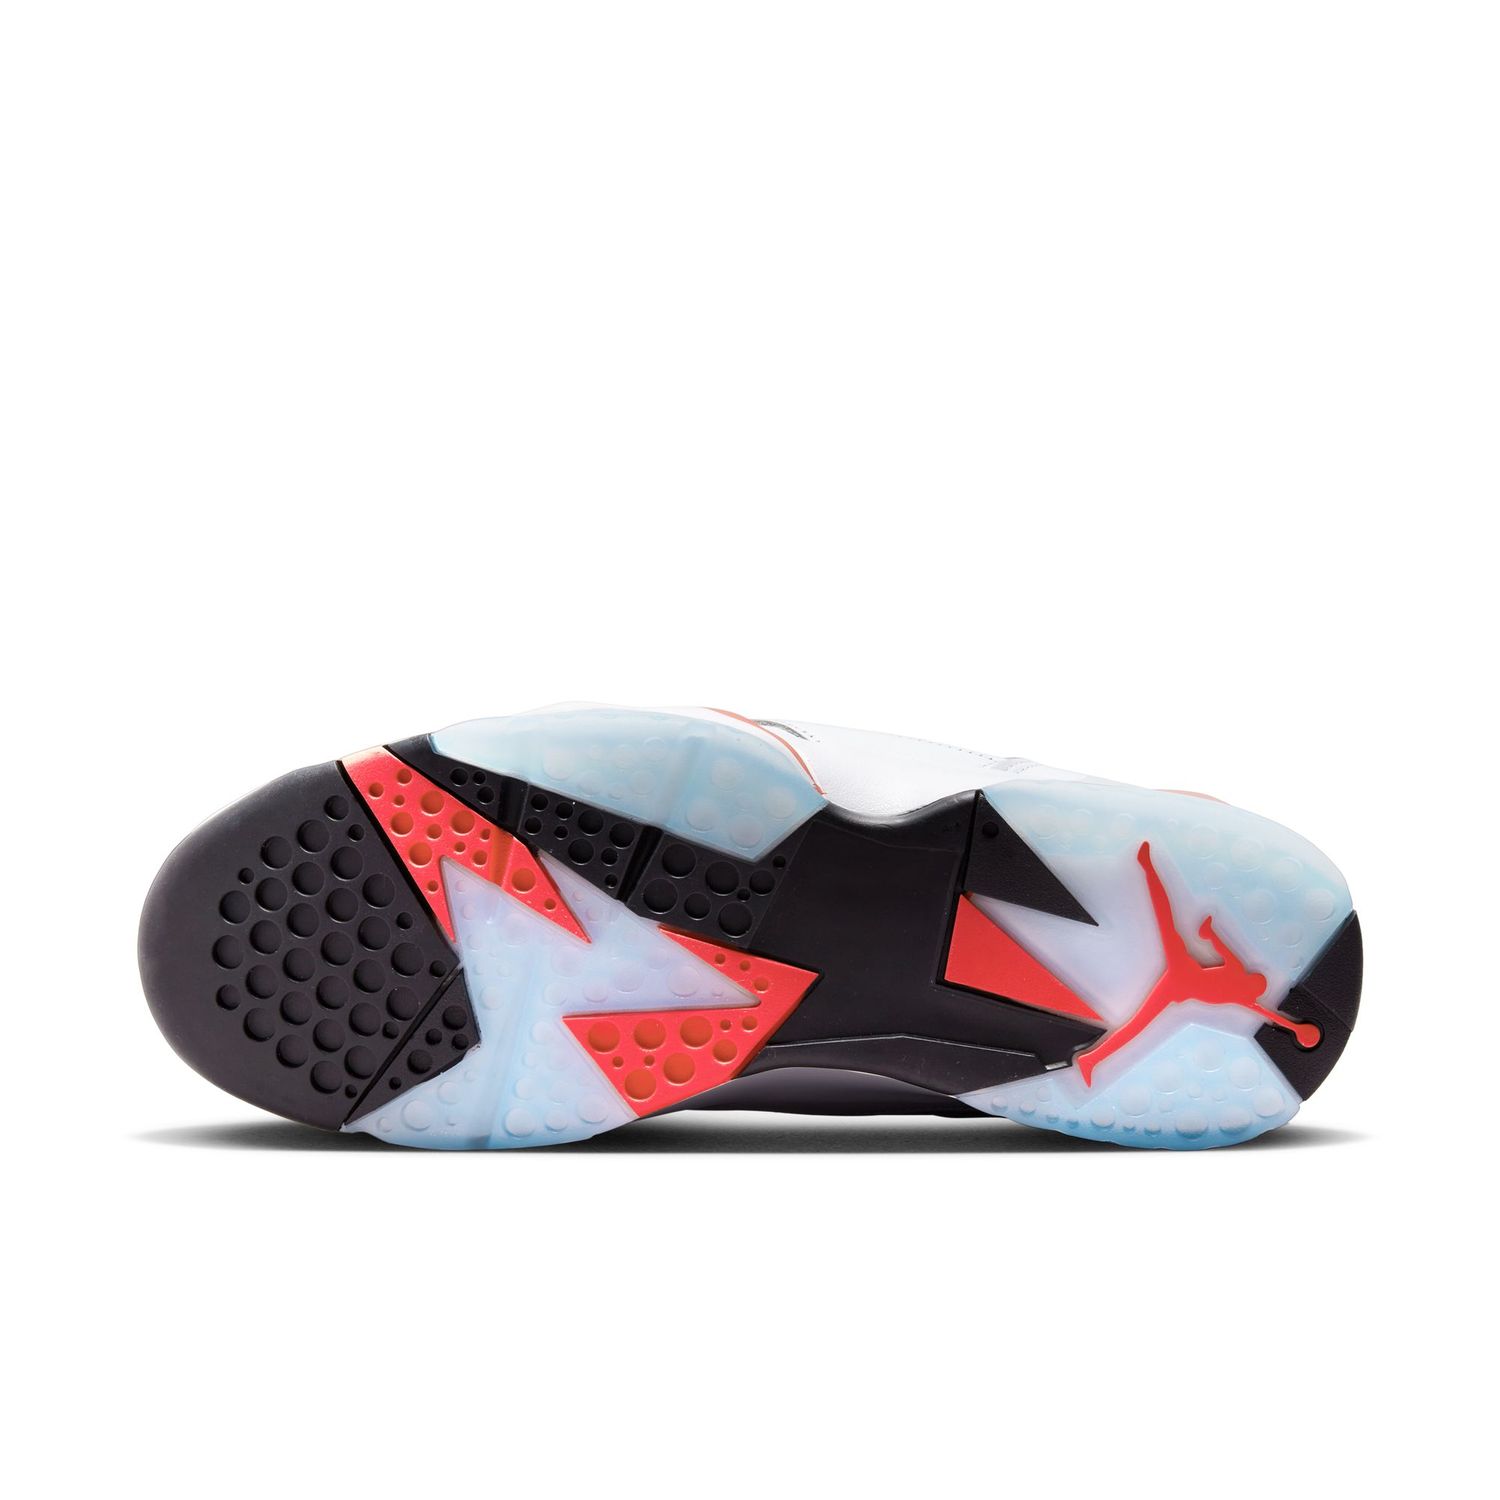 Air Jordan 7 Retro Herren Sneaker